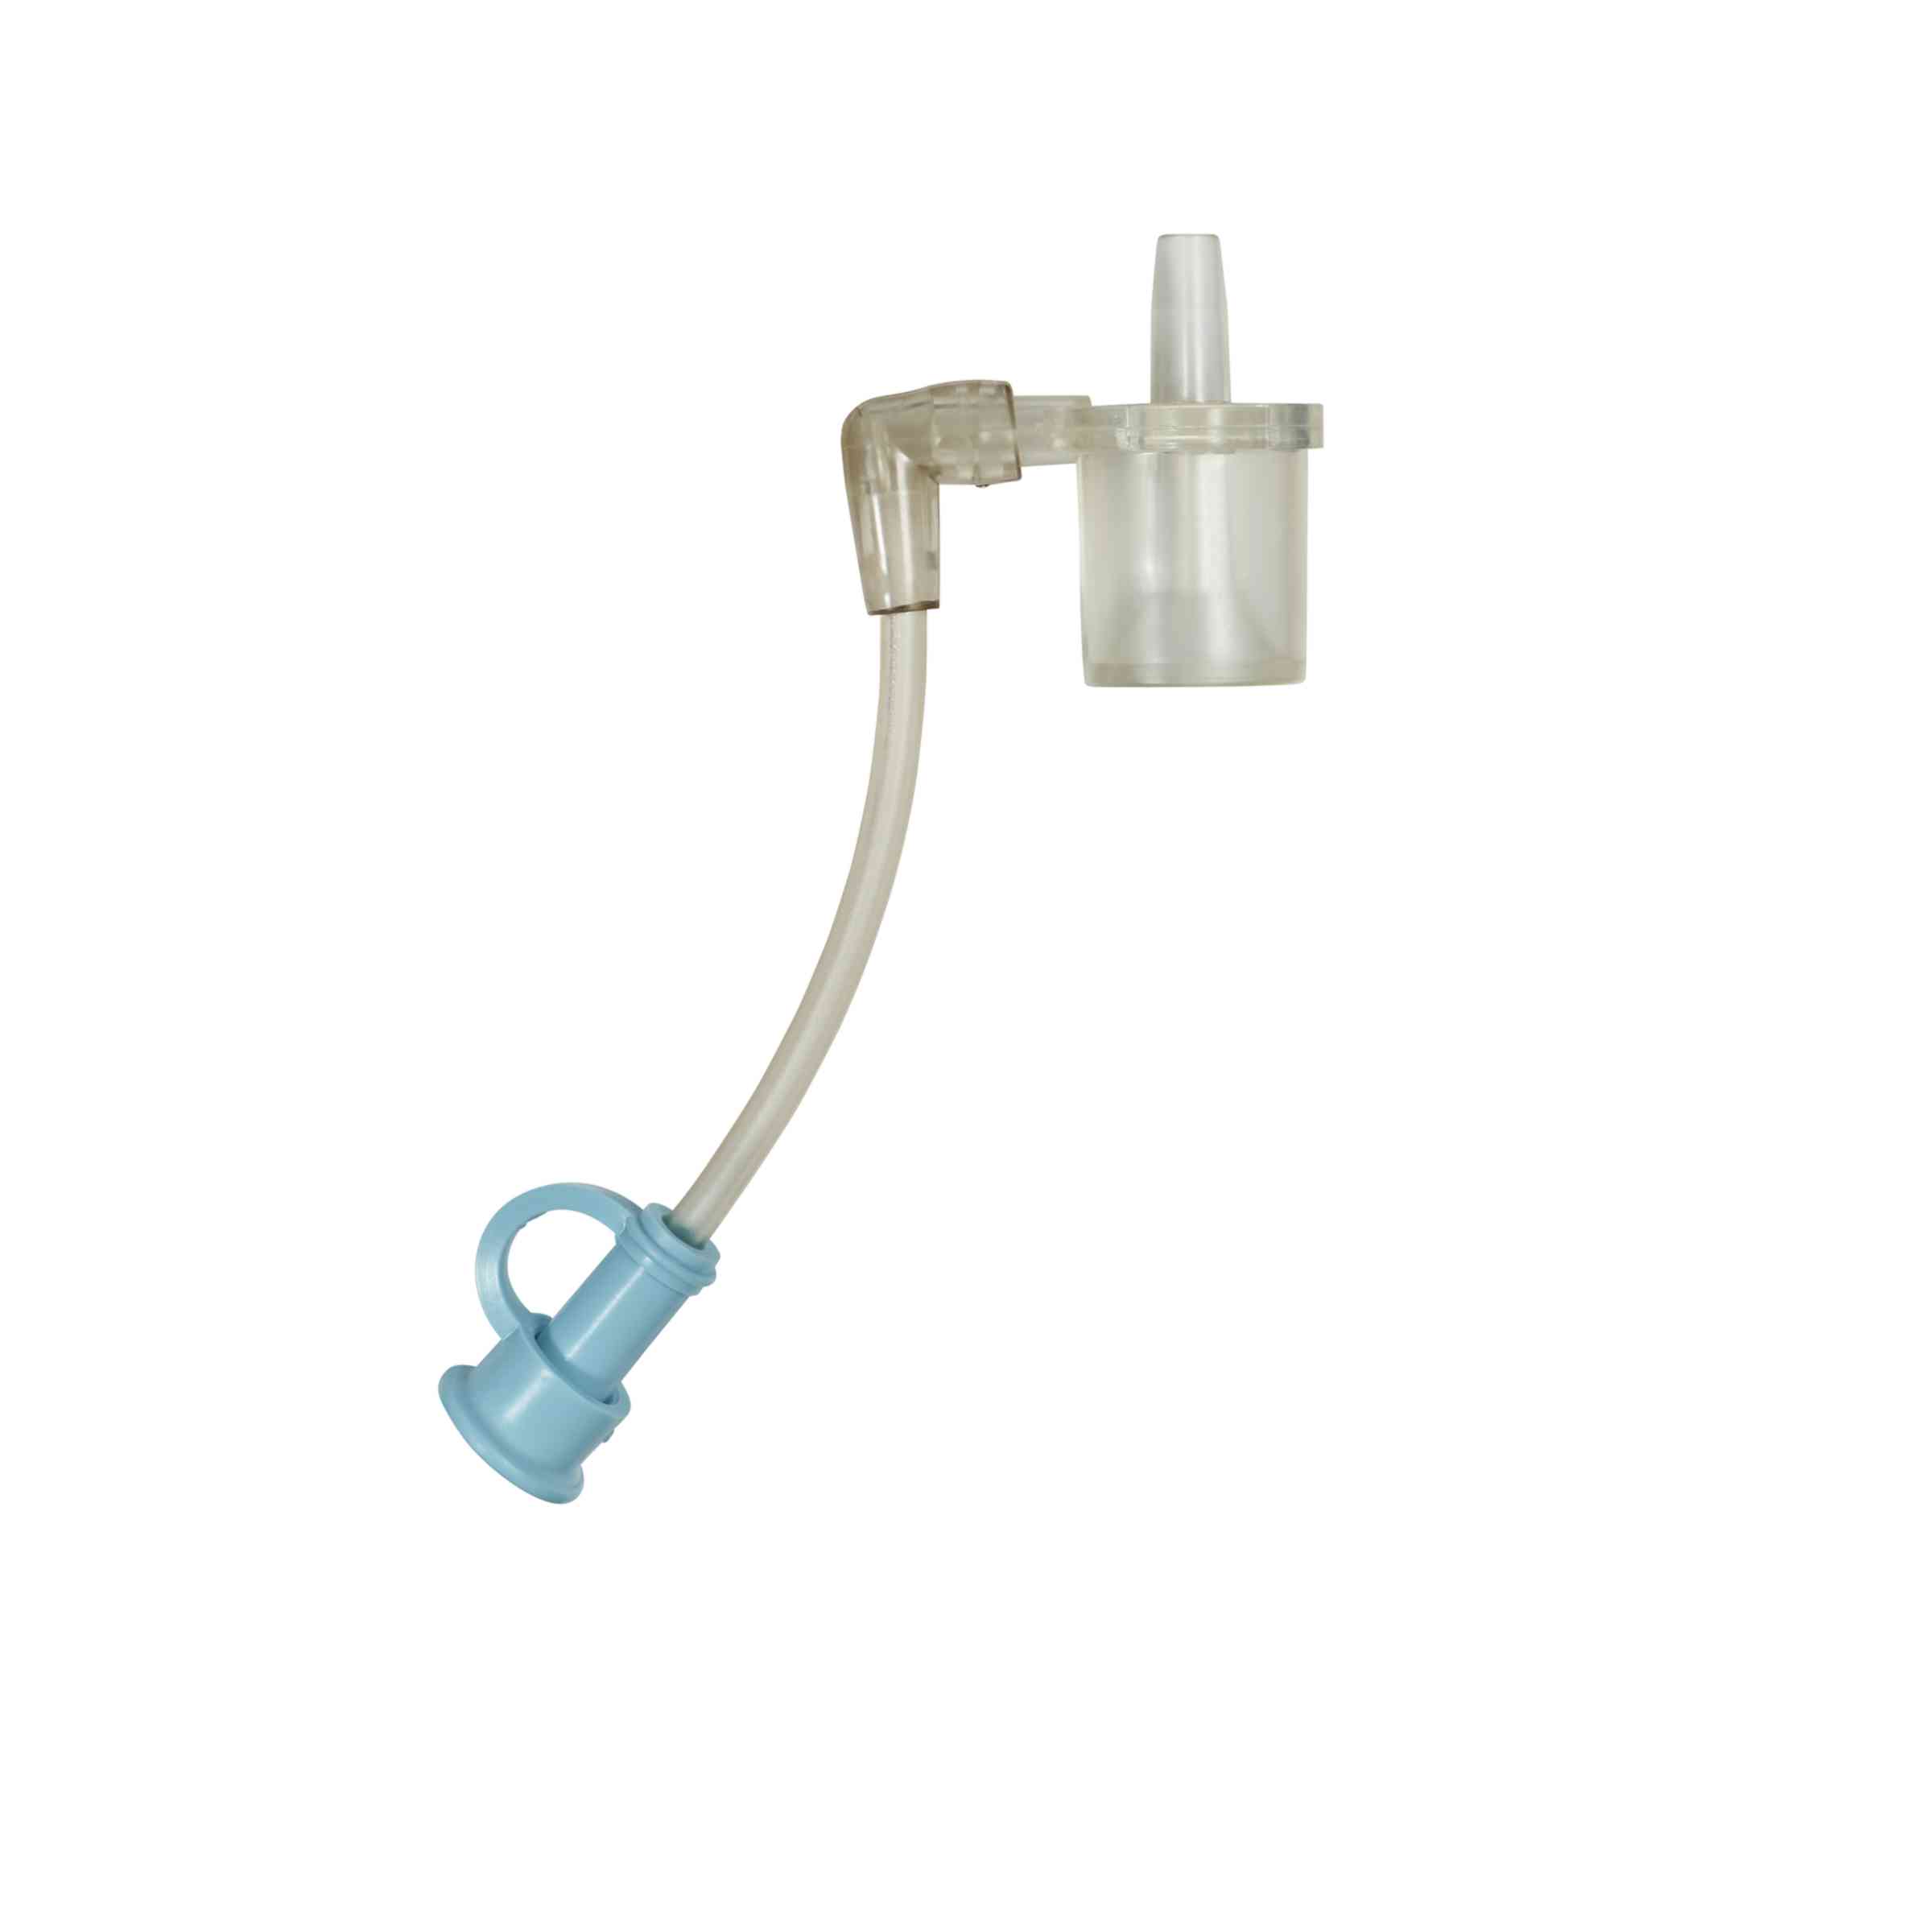 Endotracheal Tube Adapter 2.0mm 20 /CS by Avanos Medical.